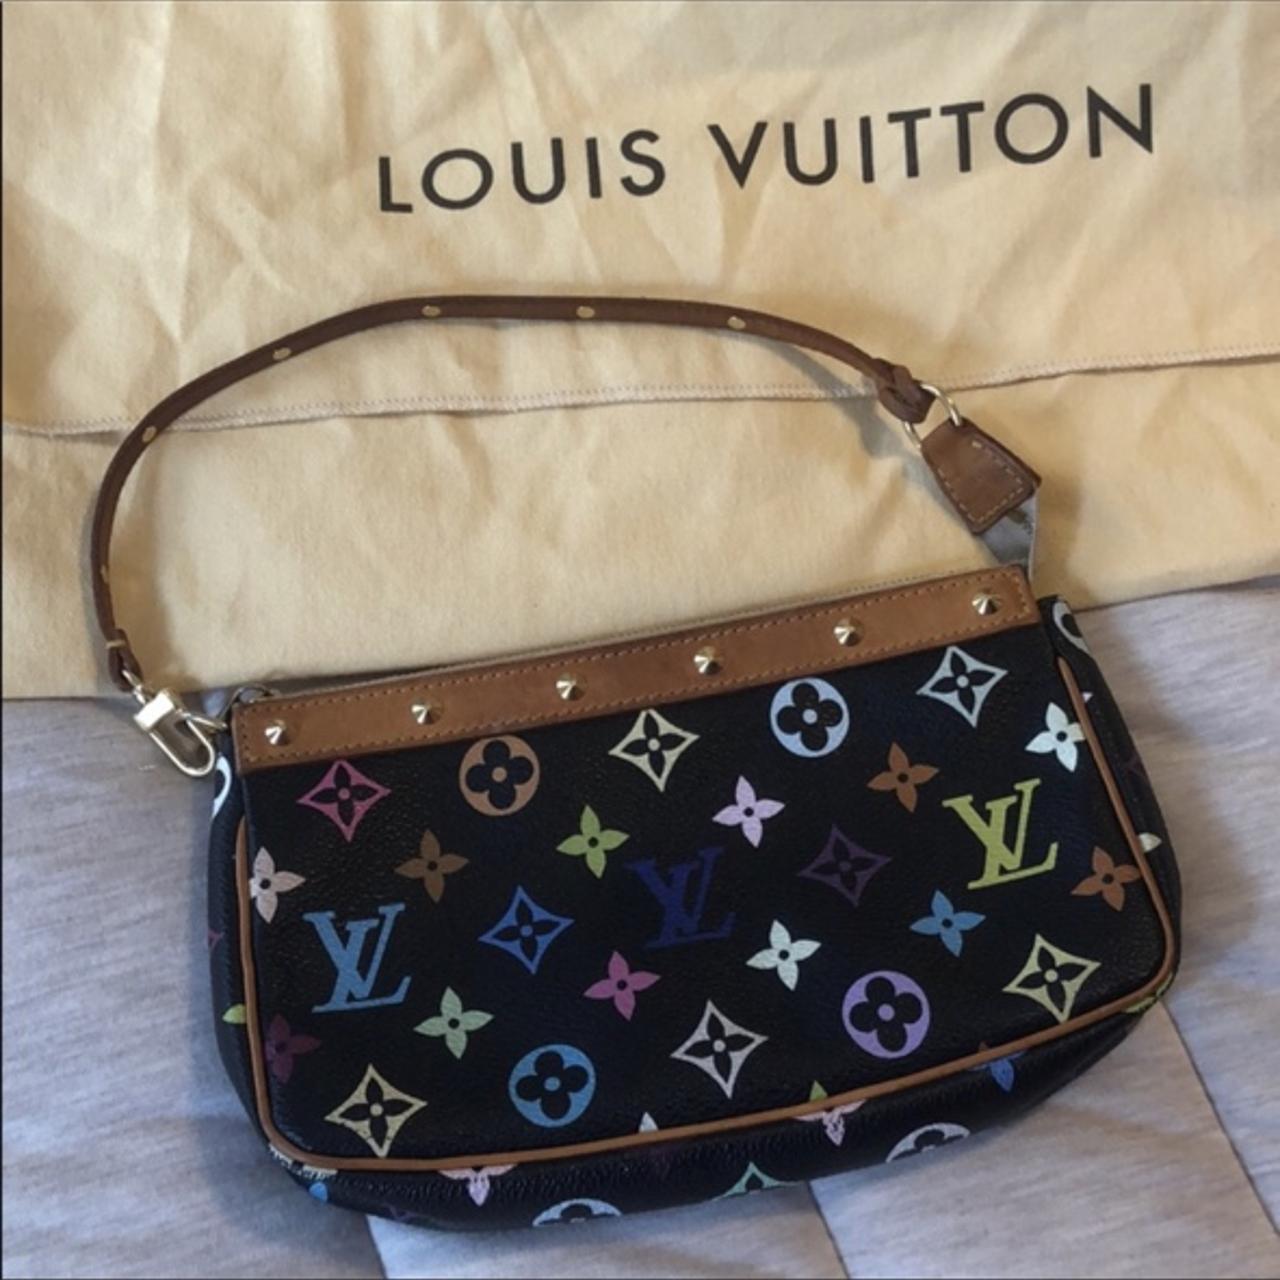 monogram LV Louis Vuitton pattern white & rainbow - Depop